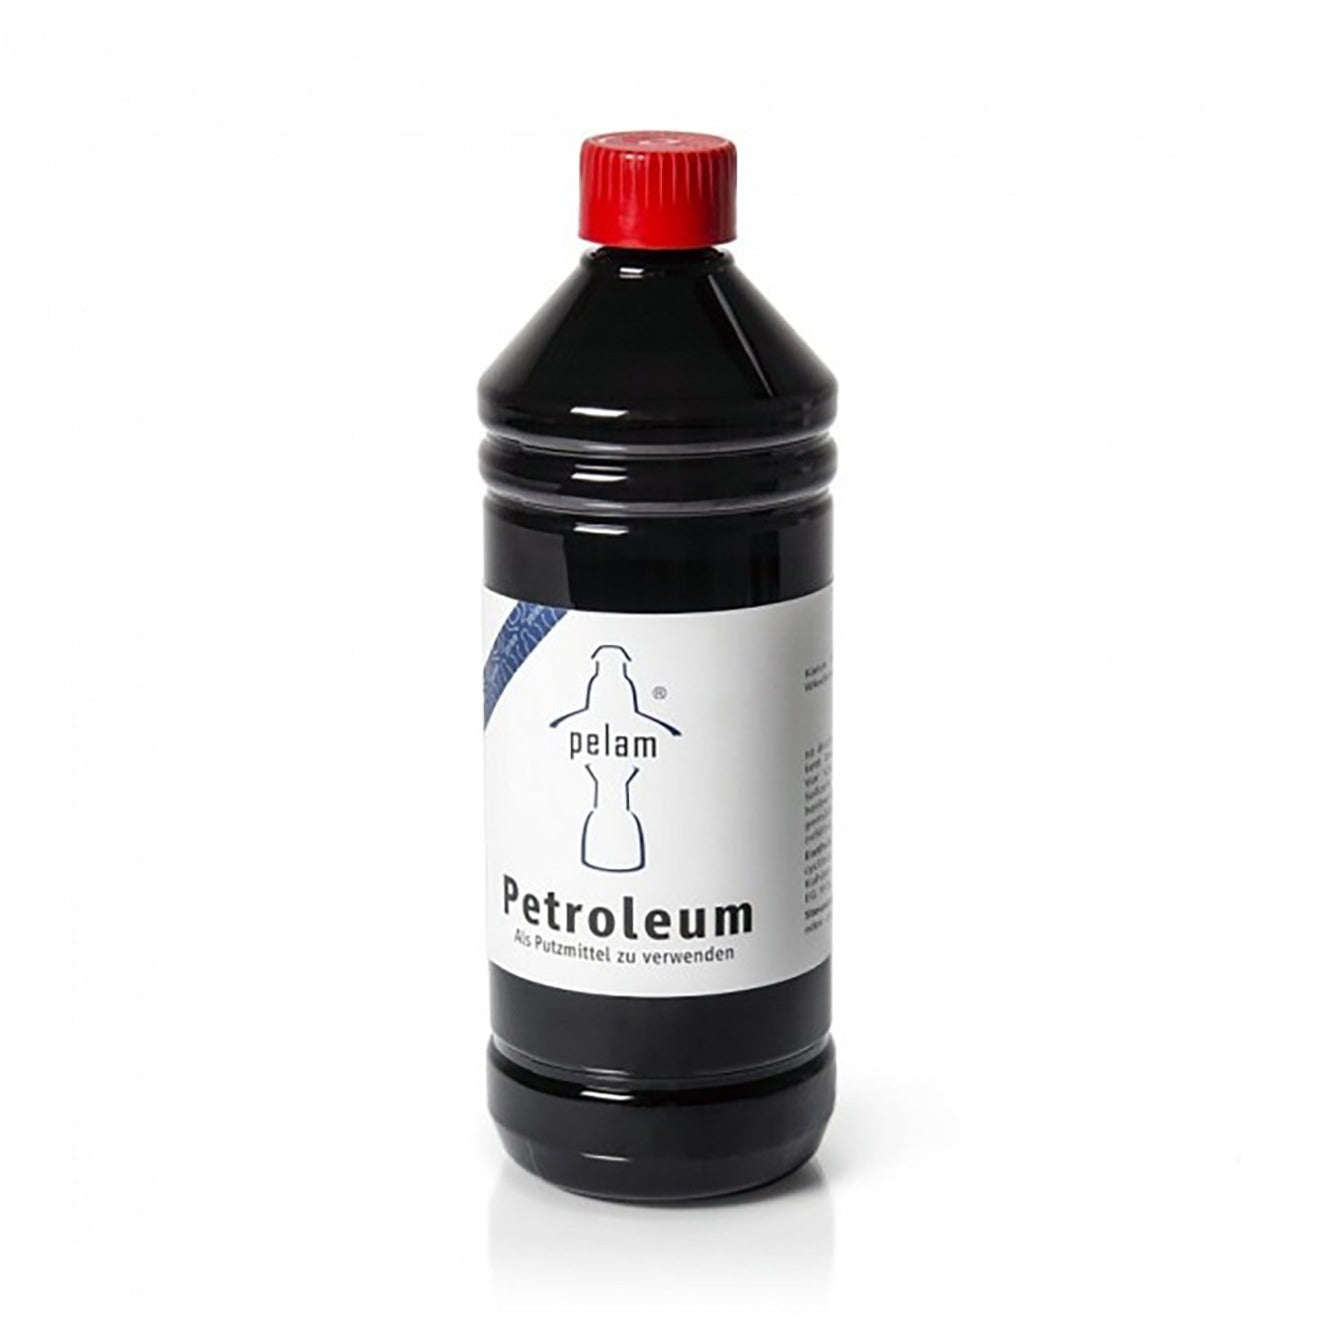 Feuerhand - Pelam 1 lt. Petroleum bottle 